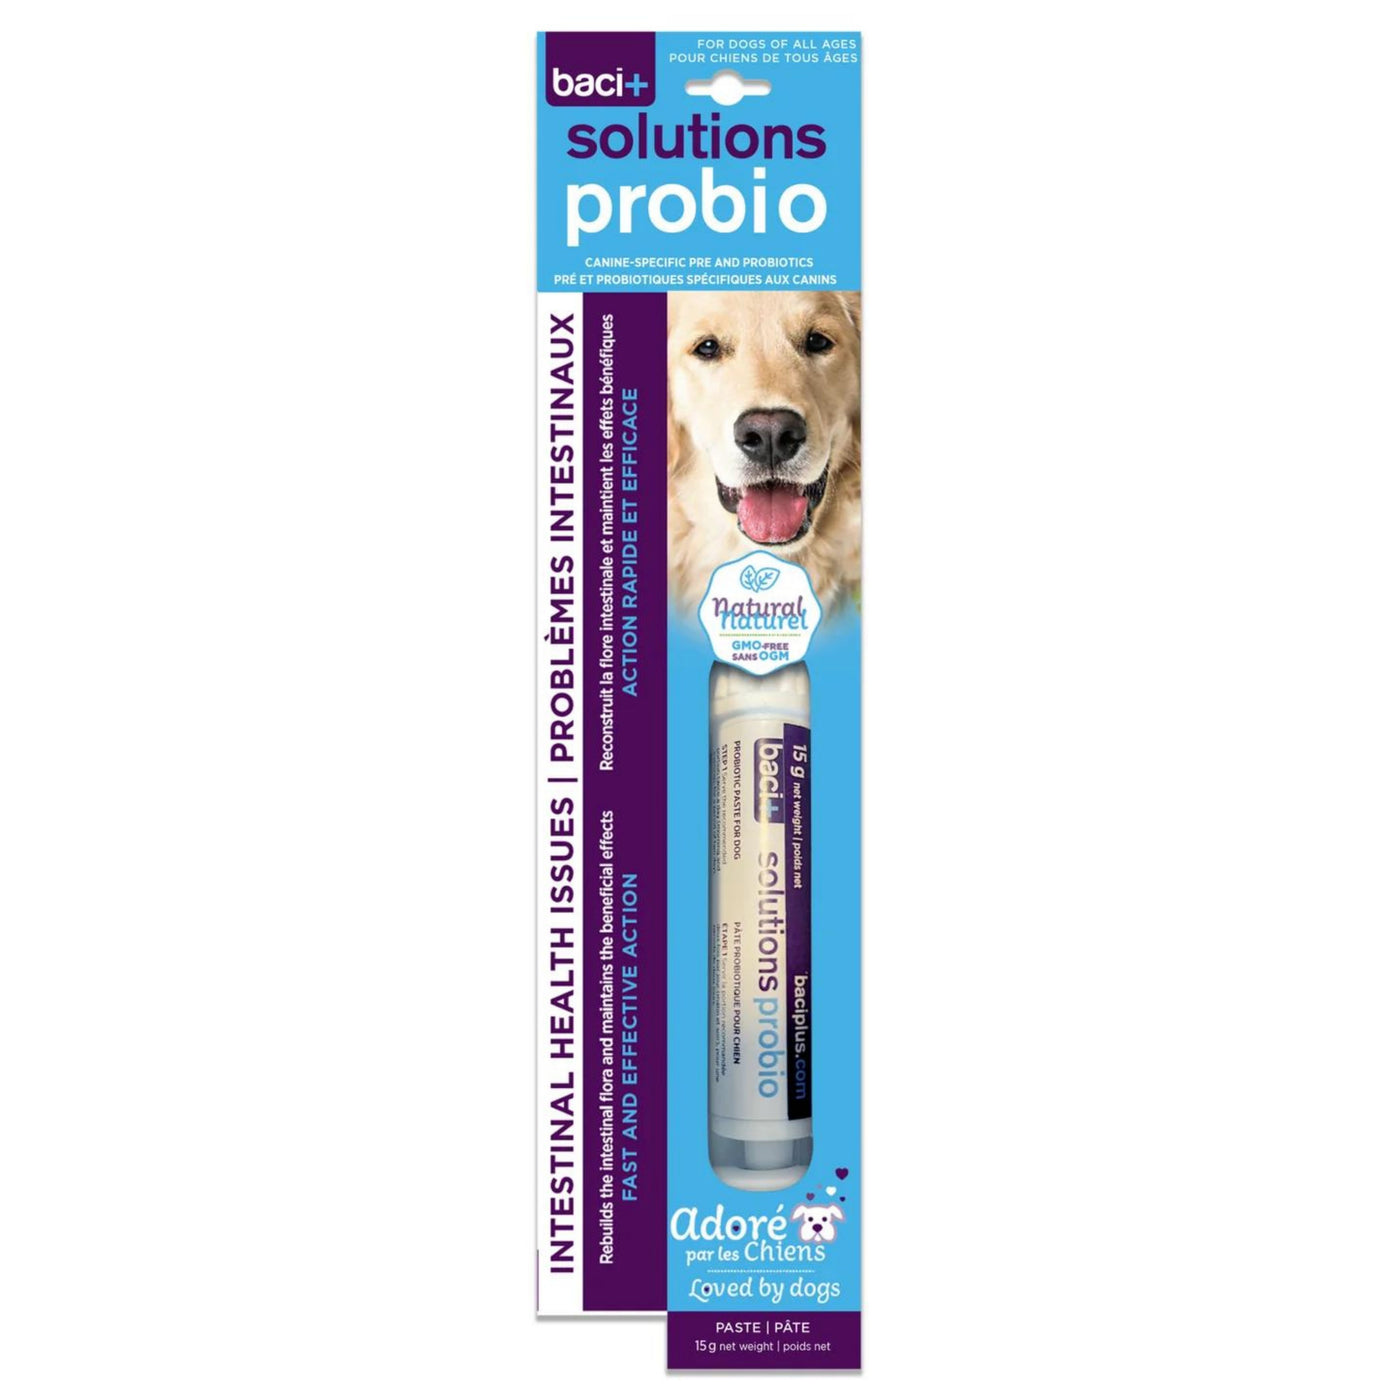 Baci+ Solutions Probio - Pre and probiotics • Intestinal problems | Dogs